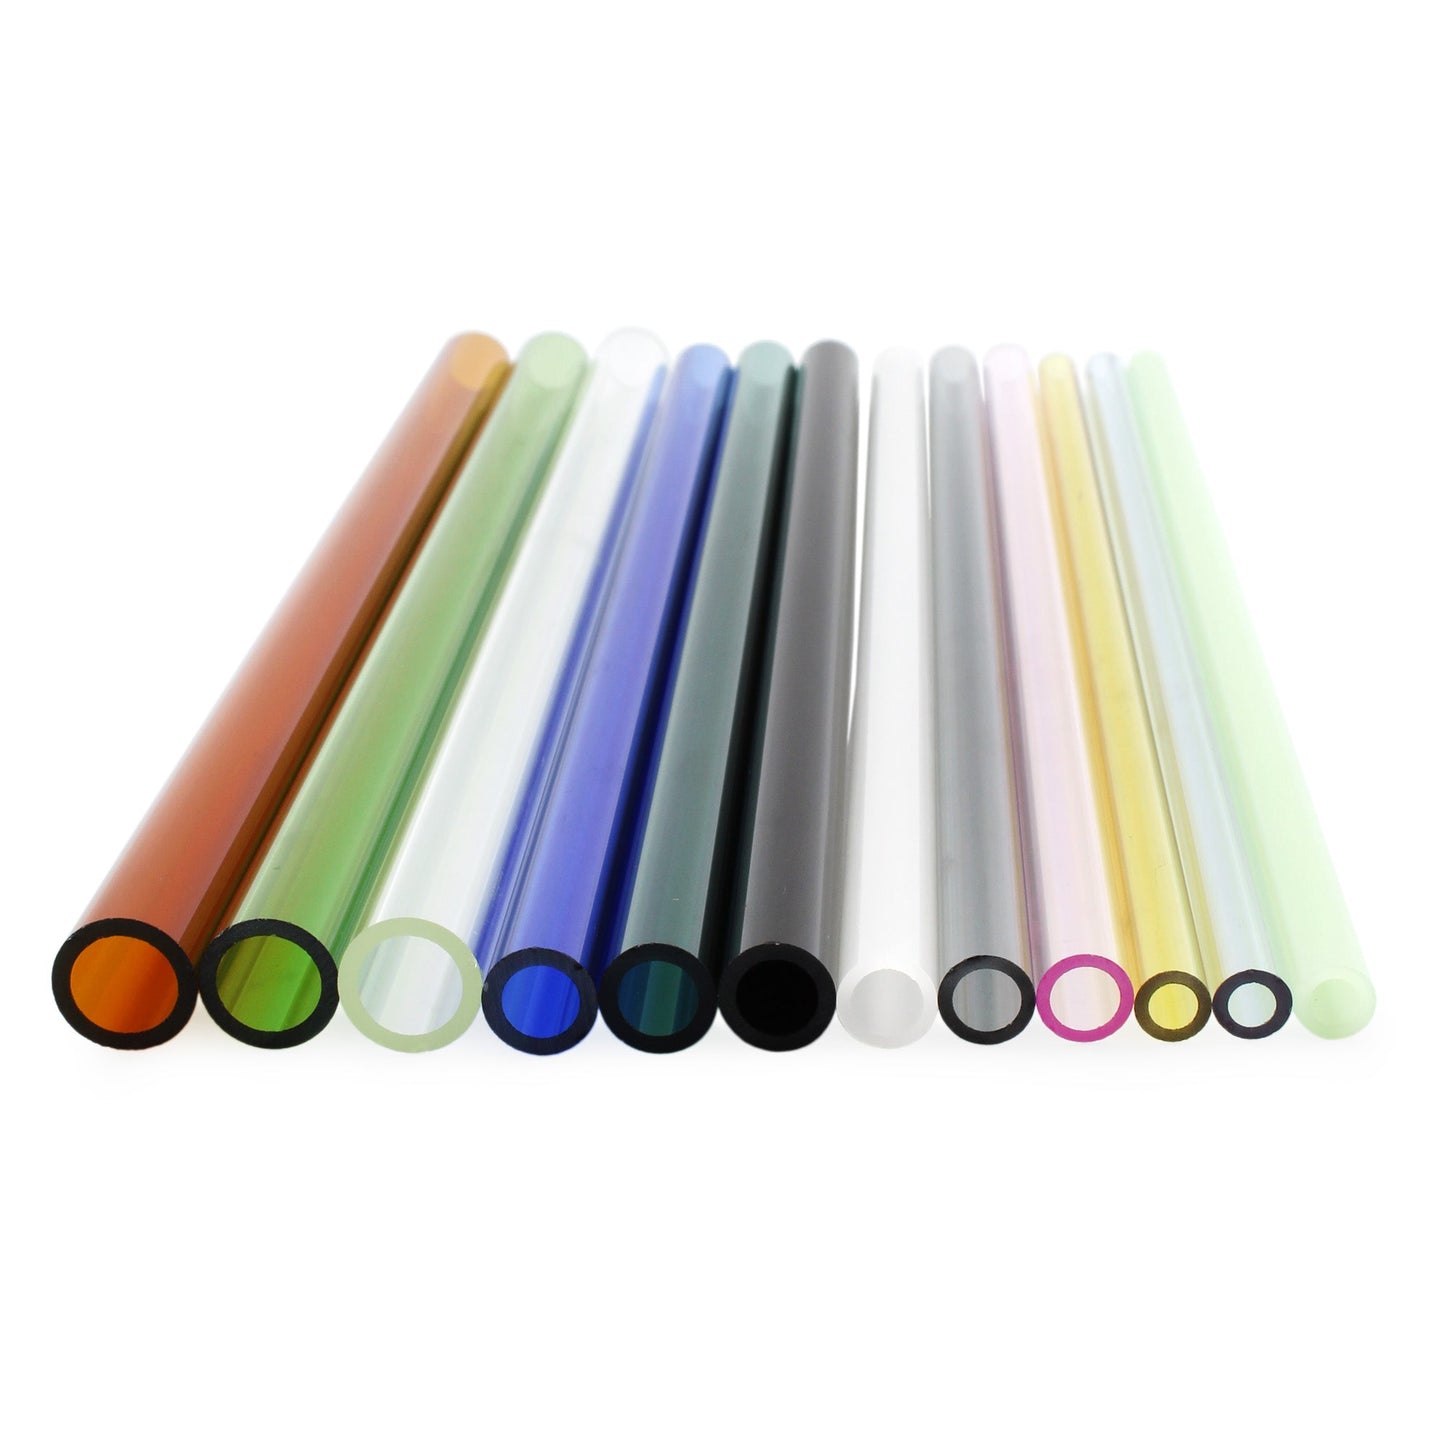 Colored Borosilicate Glass Tubes (Case of 25 Sets) - SH_2043_CASE